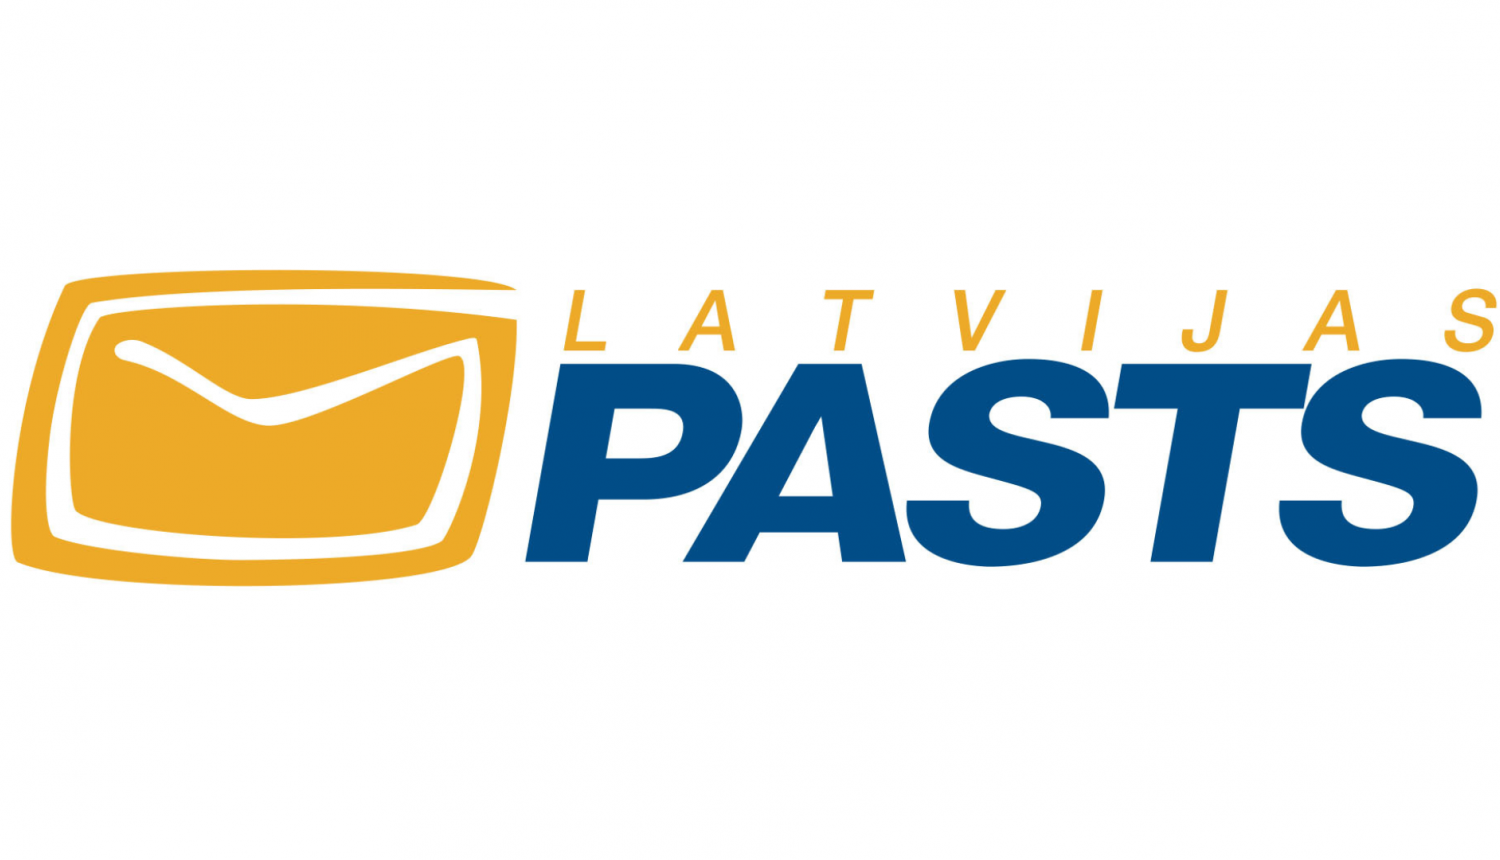 pasta logo